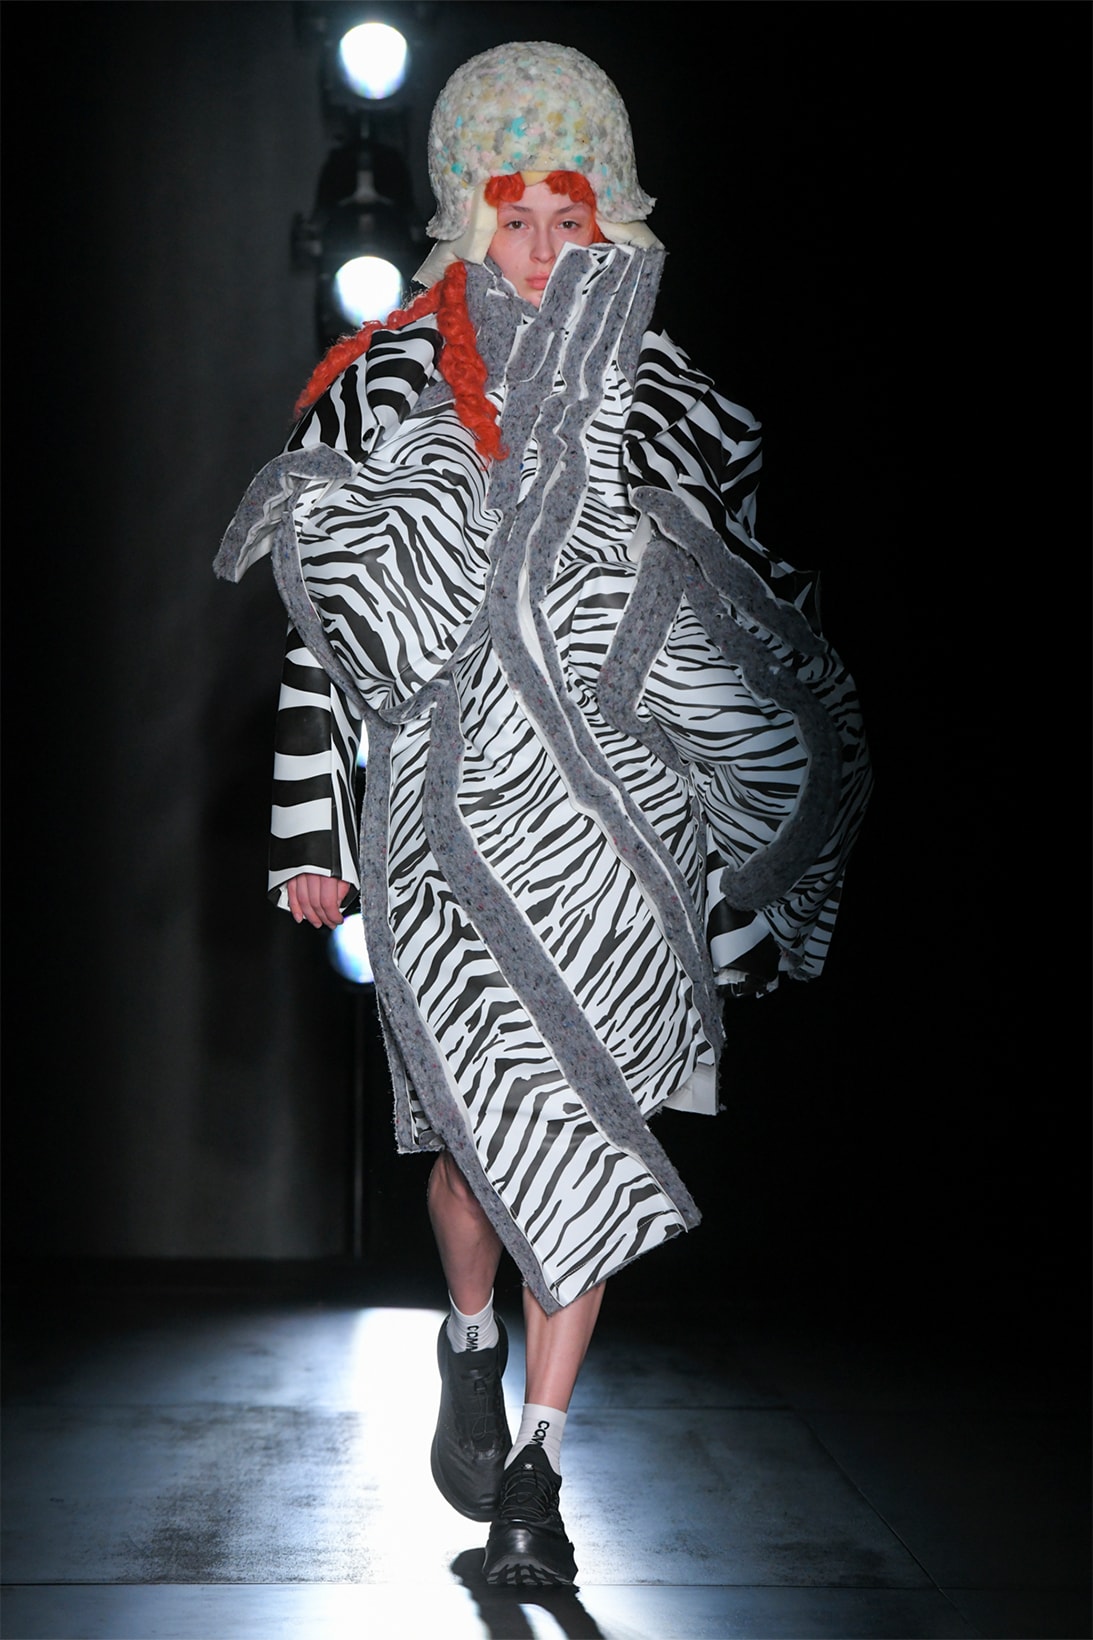 comme des garcons fall winter collection salomon pulsar platform tokyo runway show patchworked zebra dress headpiece